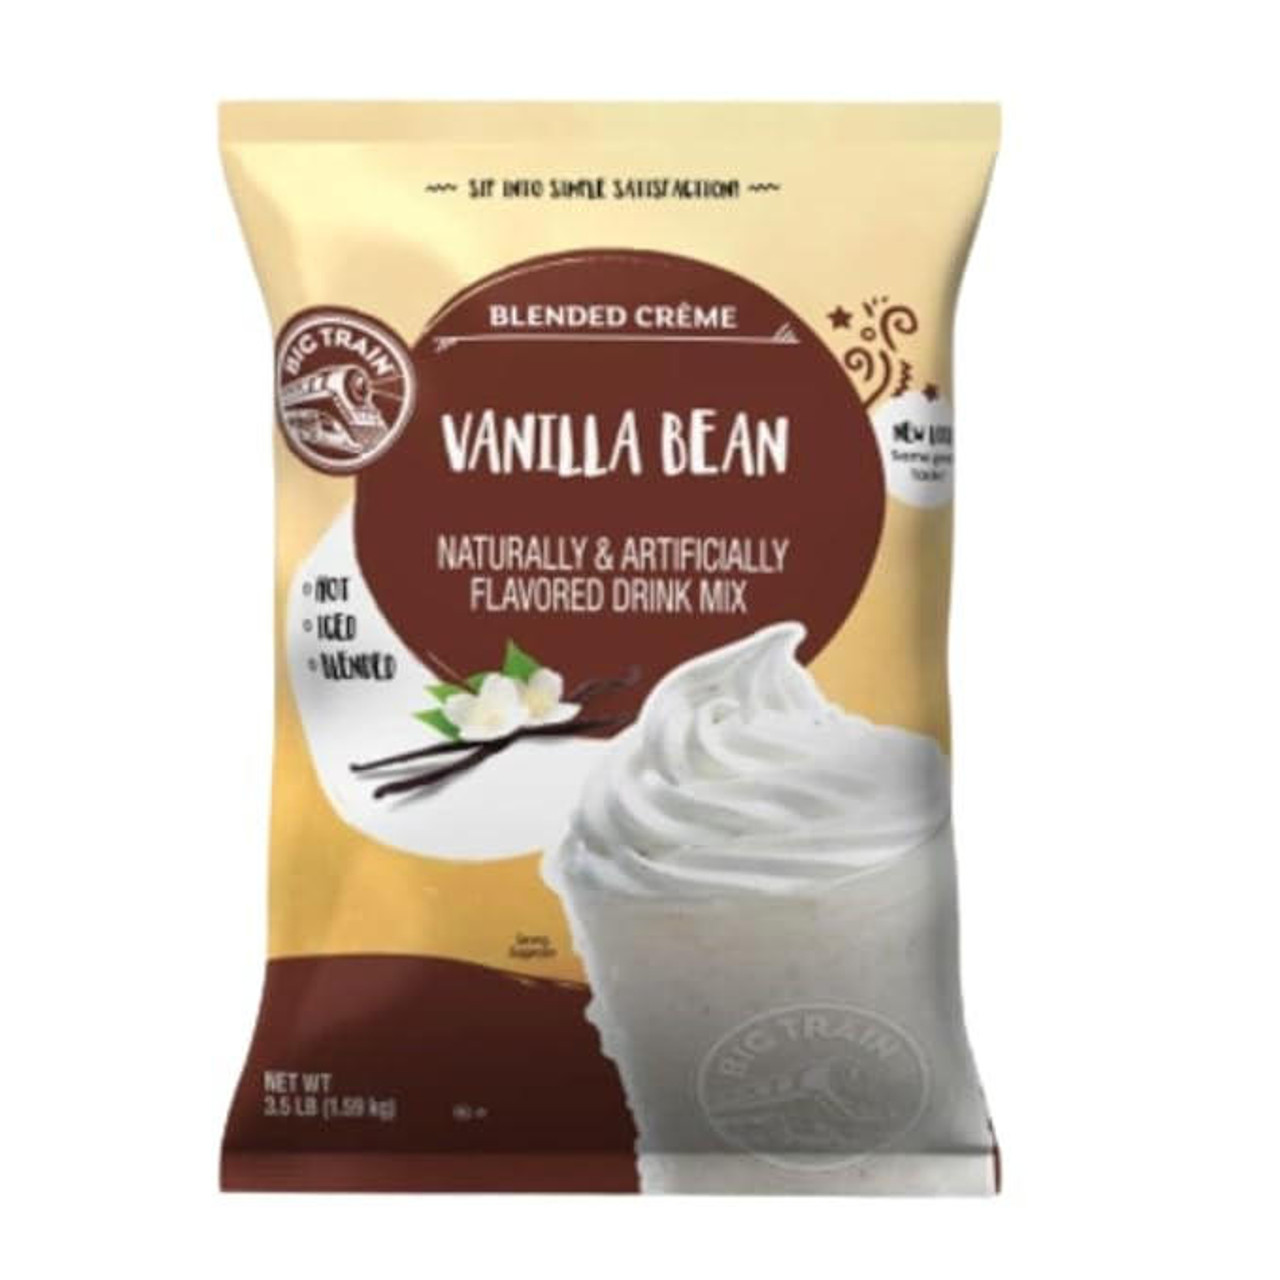  Big Train Rich Vanilla Bean Blended Creme Frappe Mix - 3.5 lbs. (5/Case) 